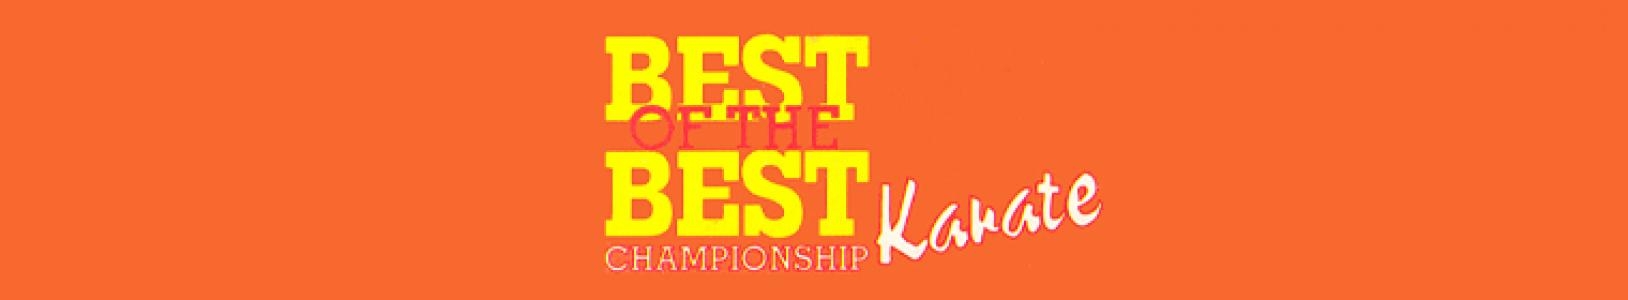 Best of the Best: Championship Karate banner